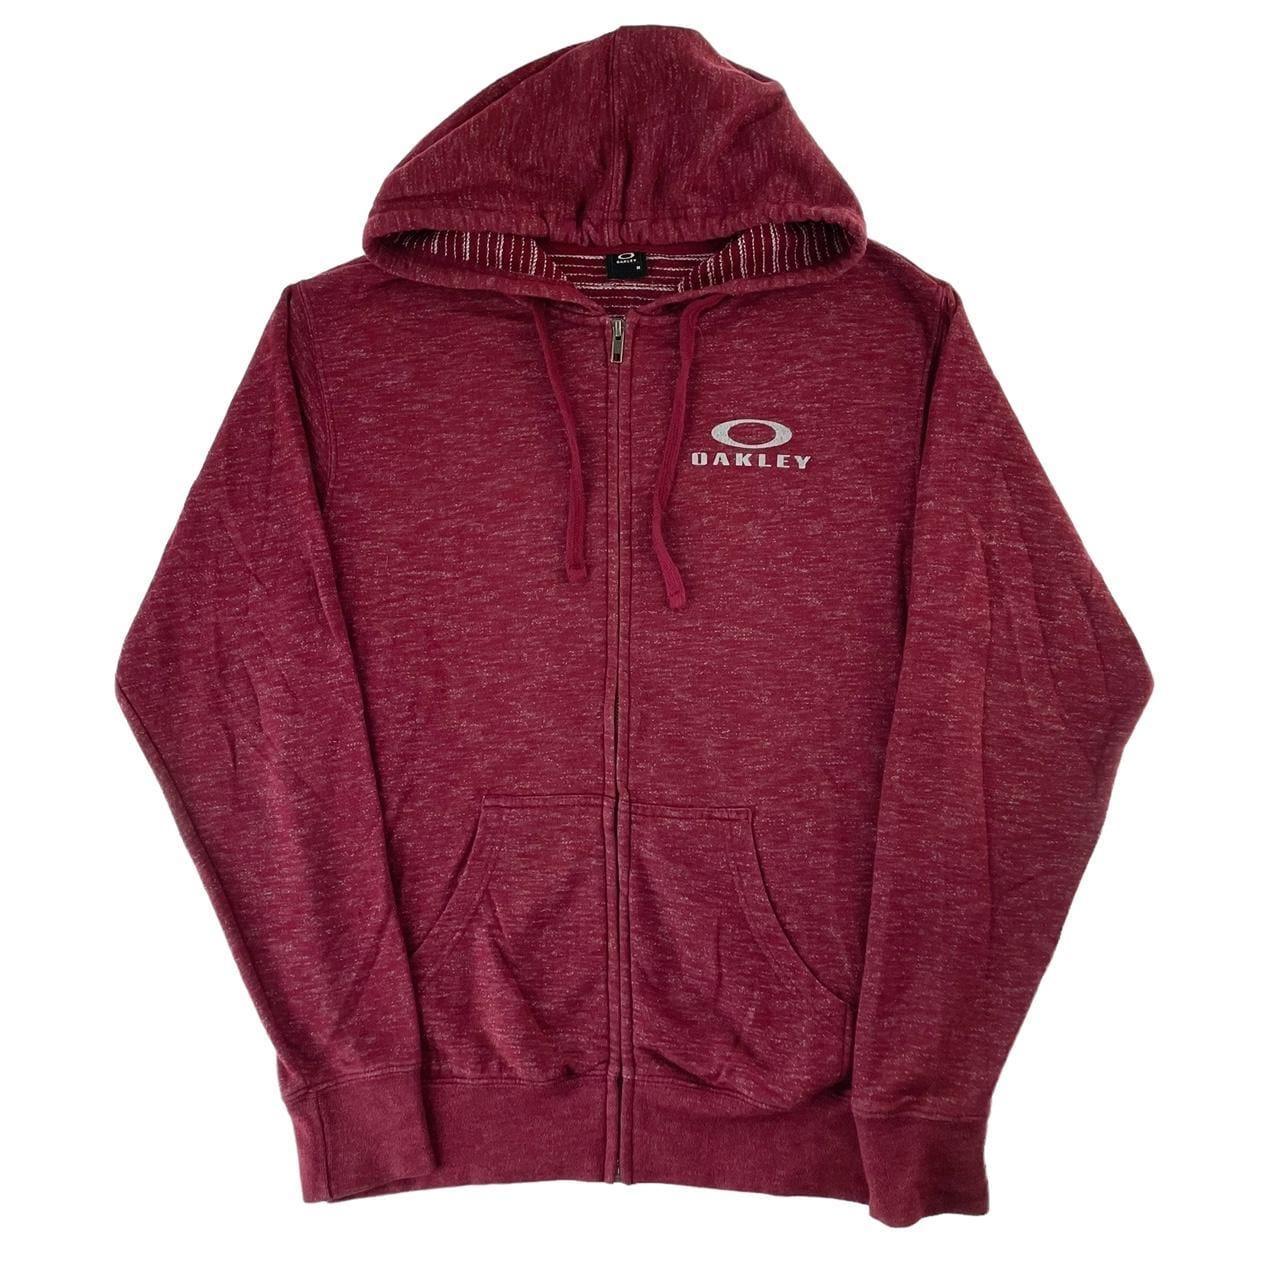 Oakley zip logo hoodie size M - Known Source